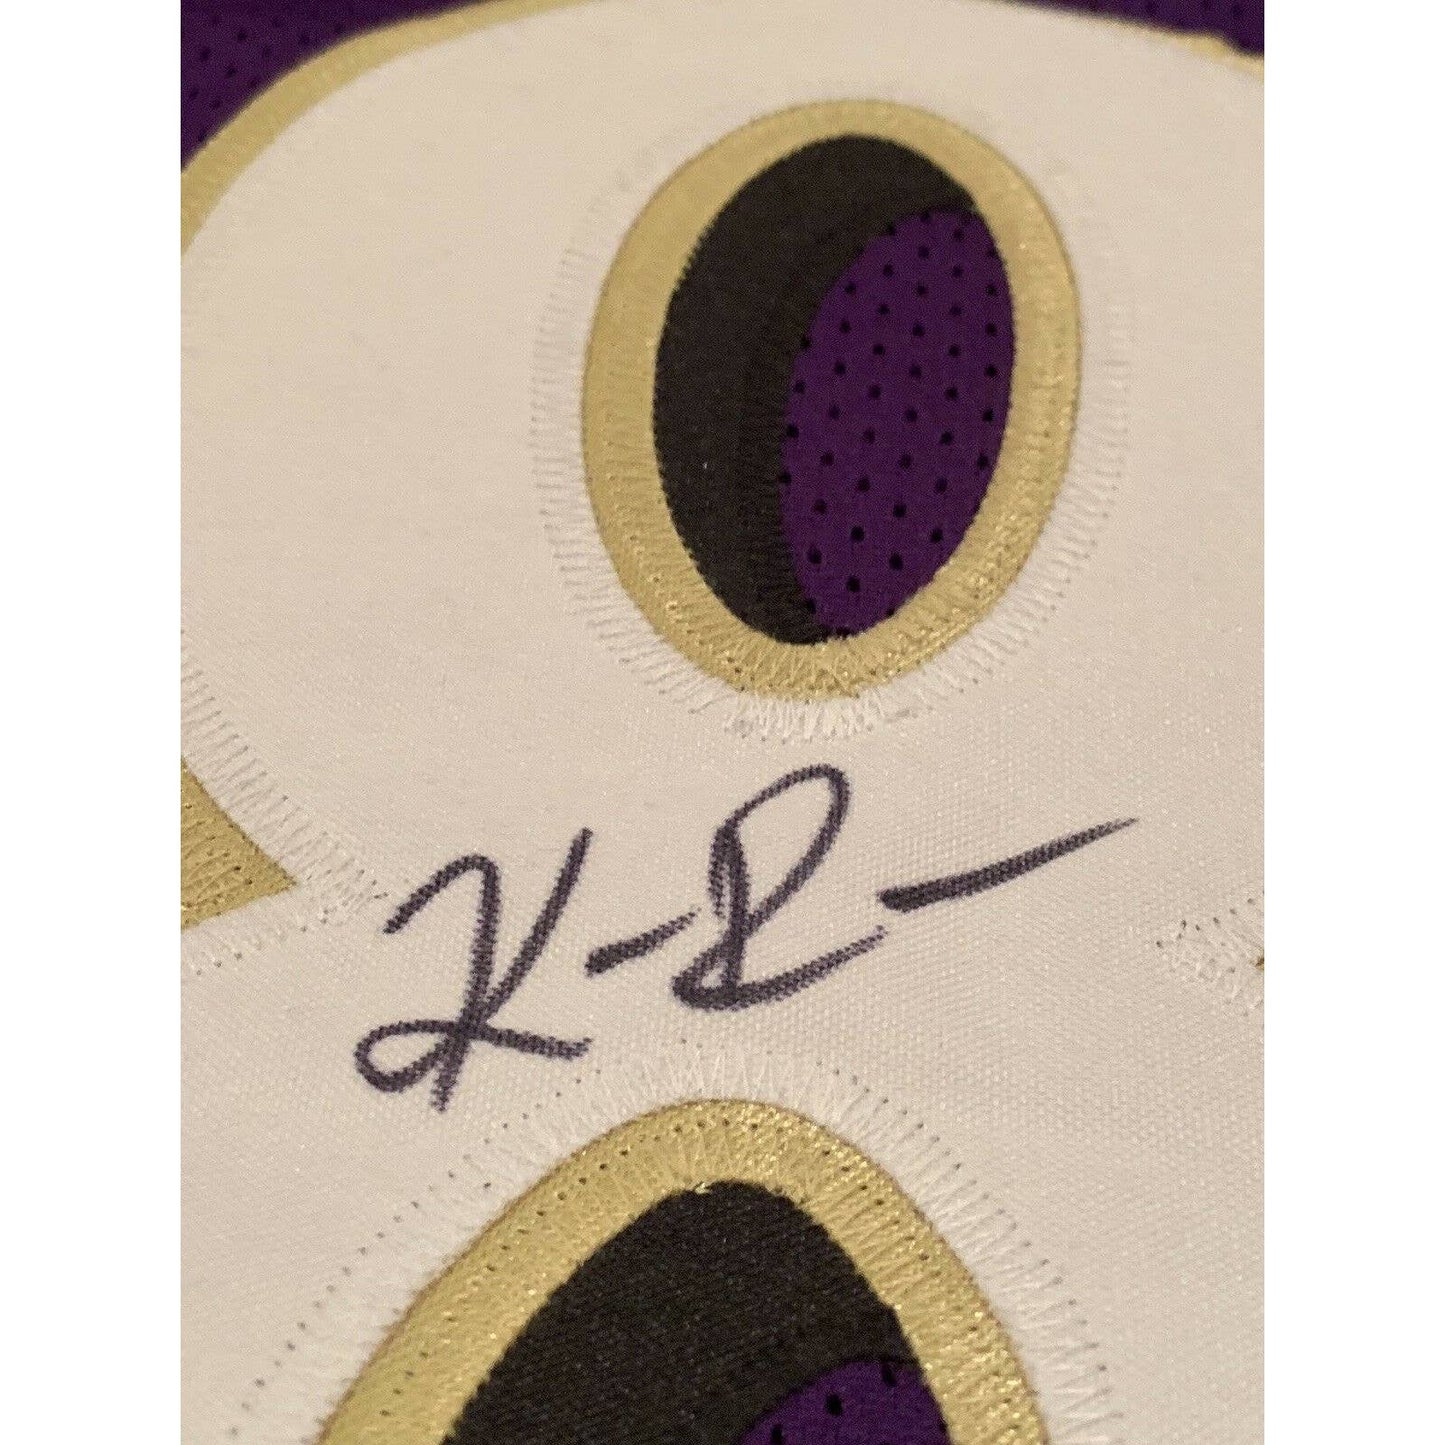 Keenan Reynolds Autographed/Signed Jersey JSA COA Baltimore Ravens Navy - TreasuresEvolved